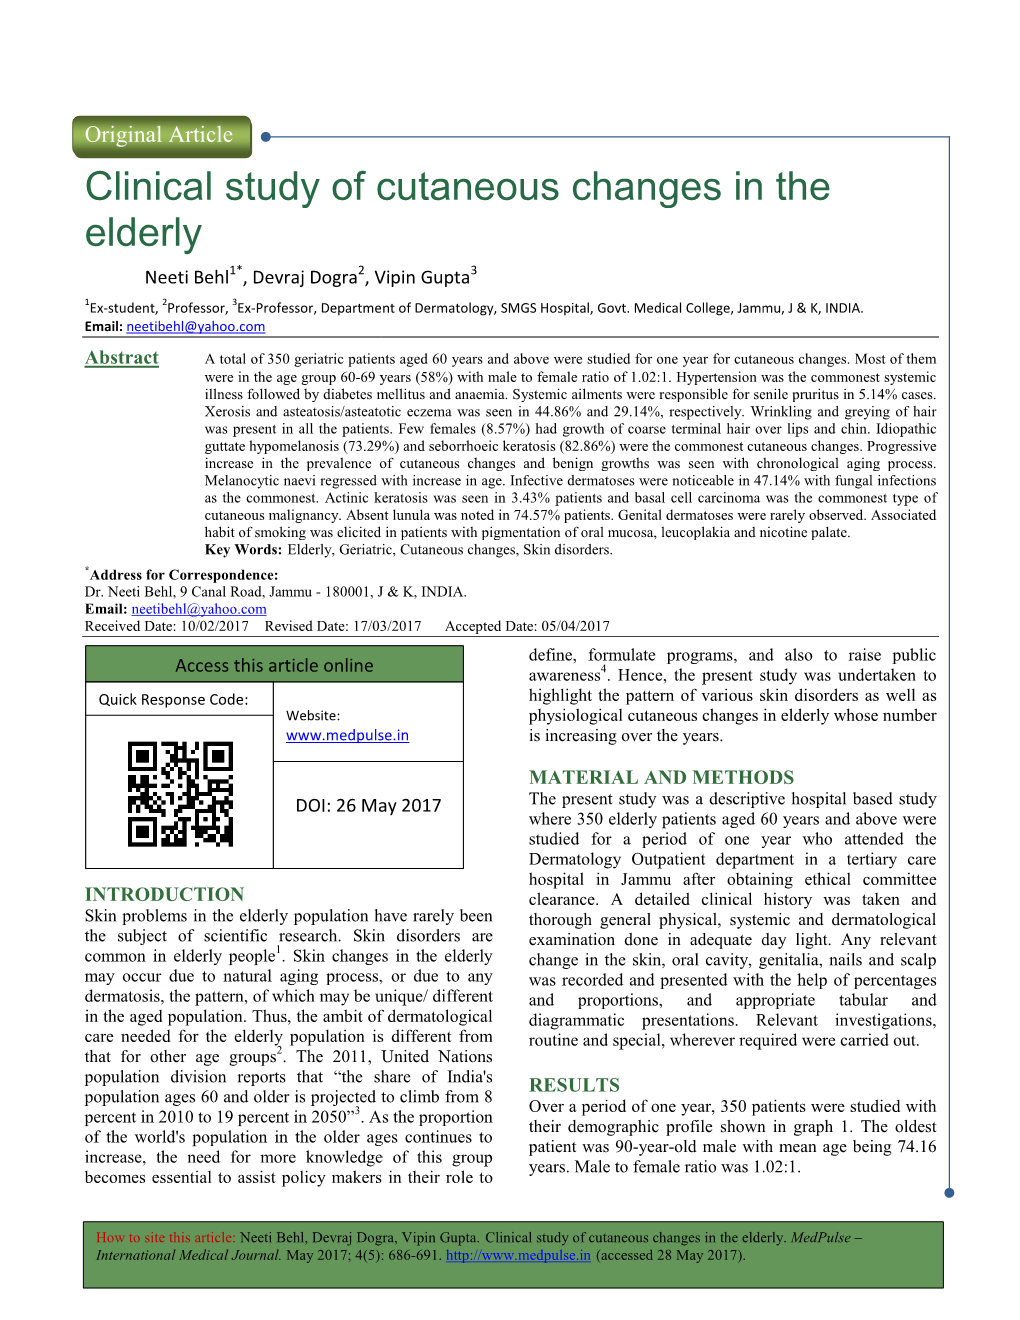 Clinical Study of Cutaneous C Elderly Al Study of Cutaneous Changes in the Changes In